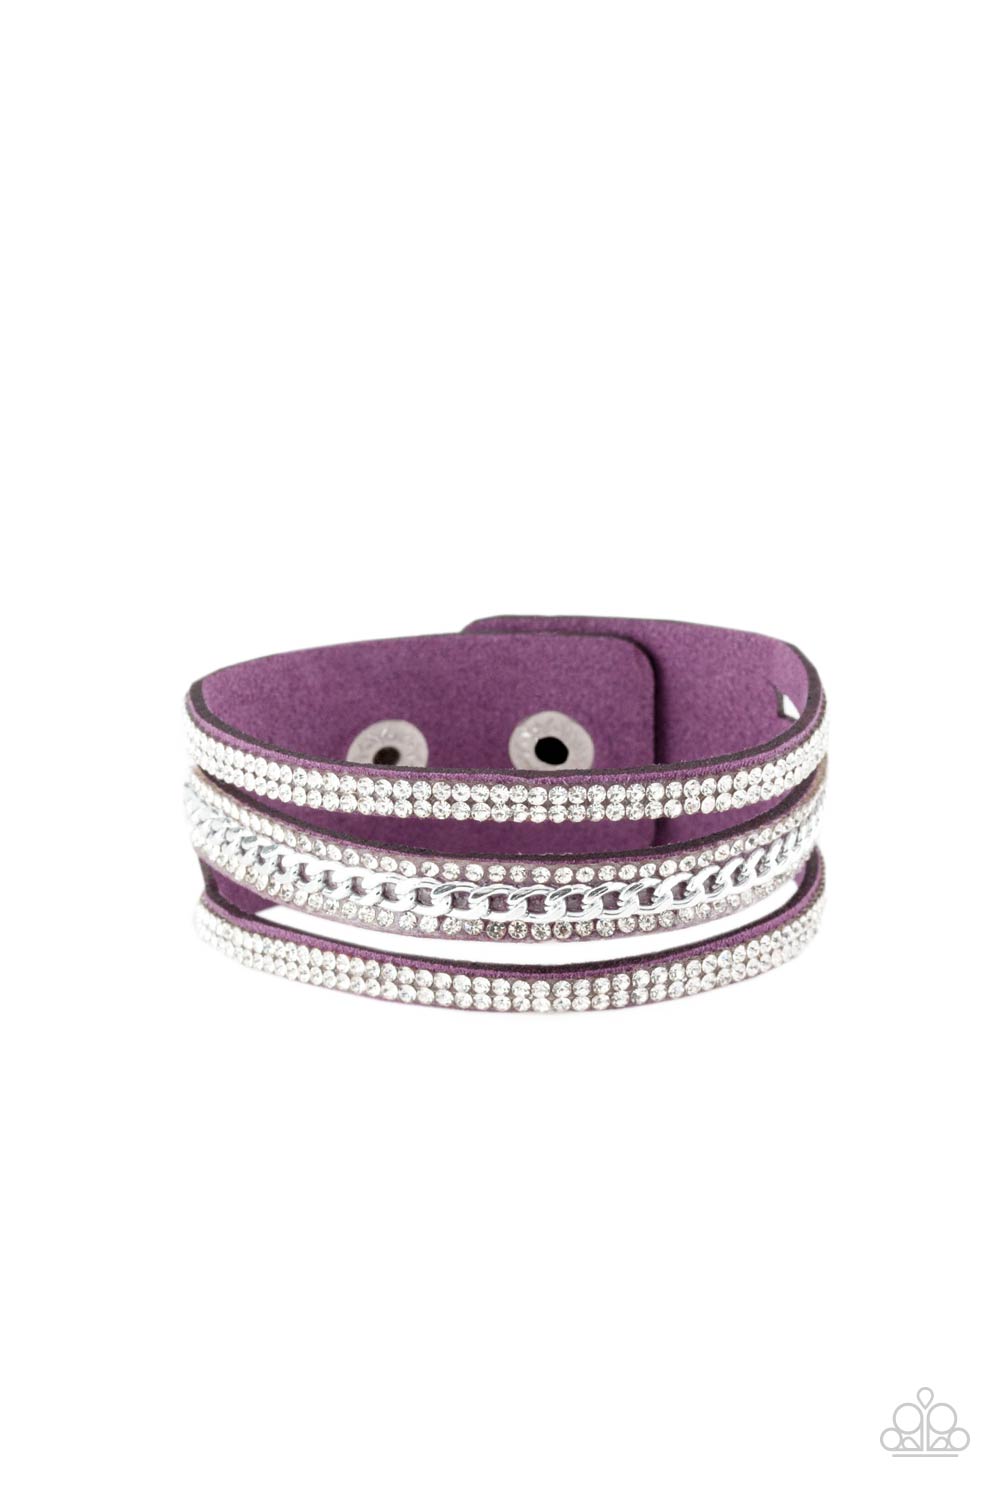 Paparazzi Rollin' In Rhinestones Purple Single Wrap Snap Bracelet - P9DI-URPR-040XX